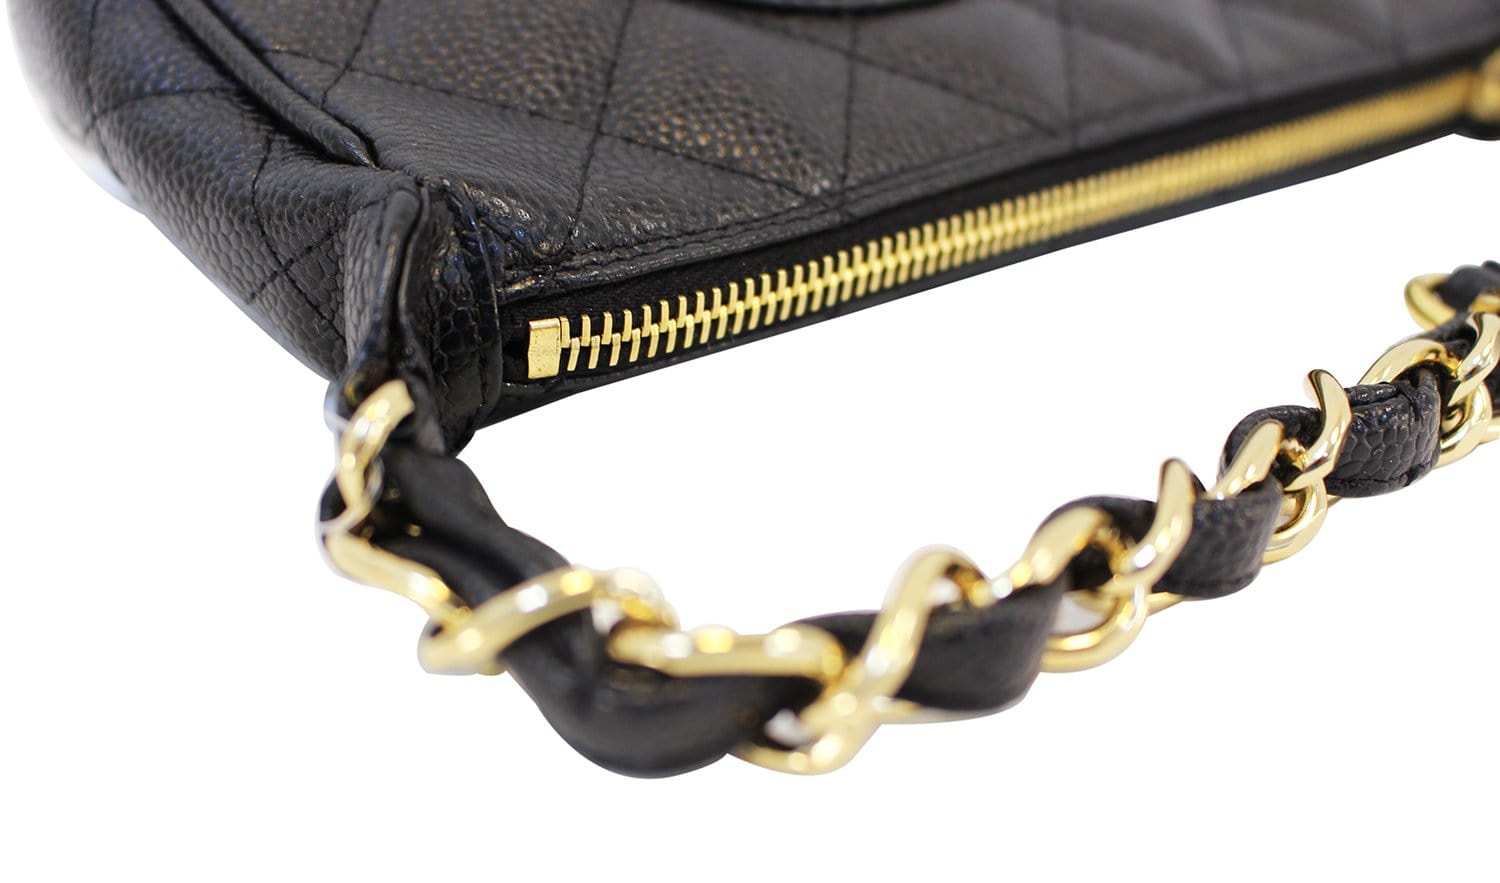 Chanel Shoulder Bag - CHANEL Black Sac Divers Mini Caviar